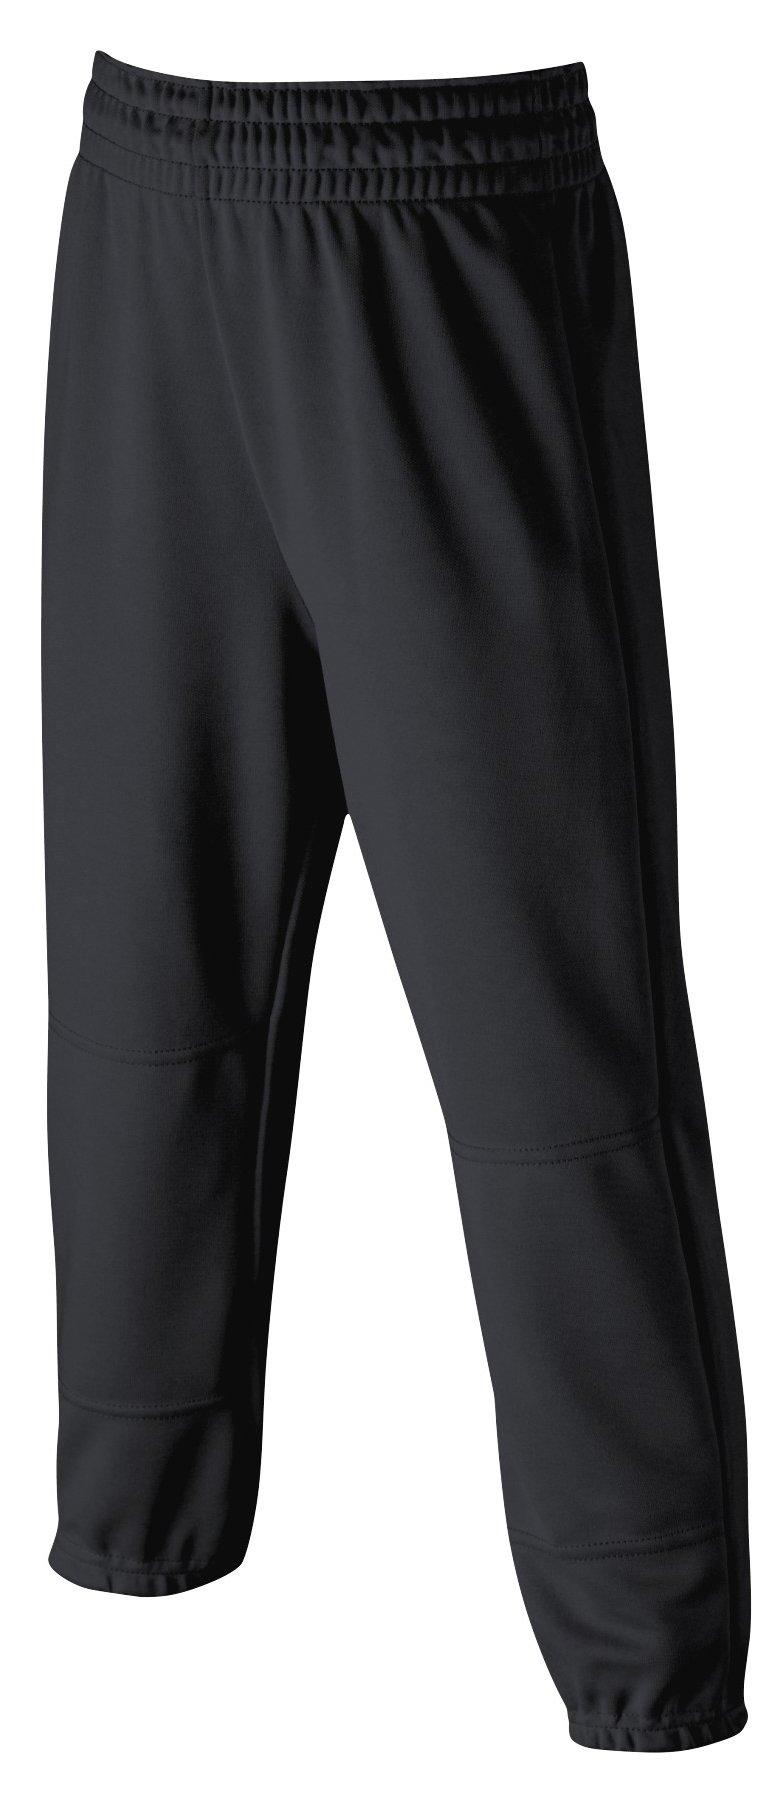 Wilson Youth Baseball Pull-Up Pants with Full Elastic Waistband, Grey